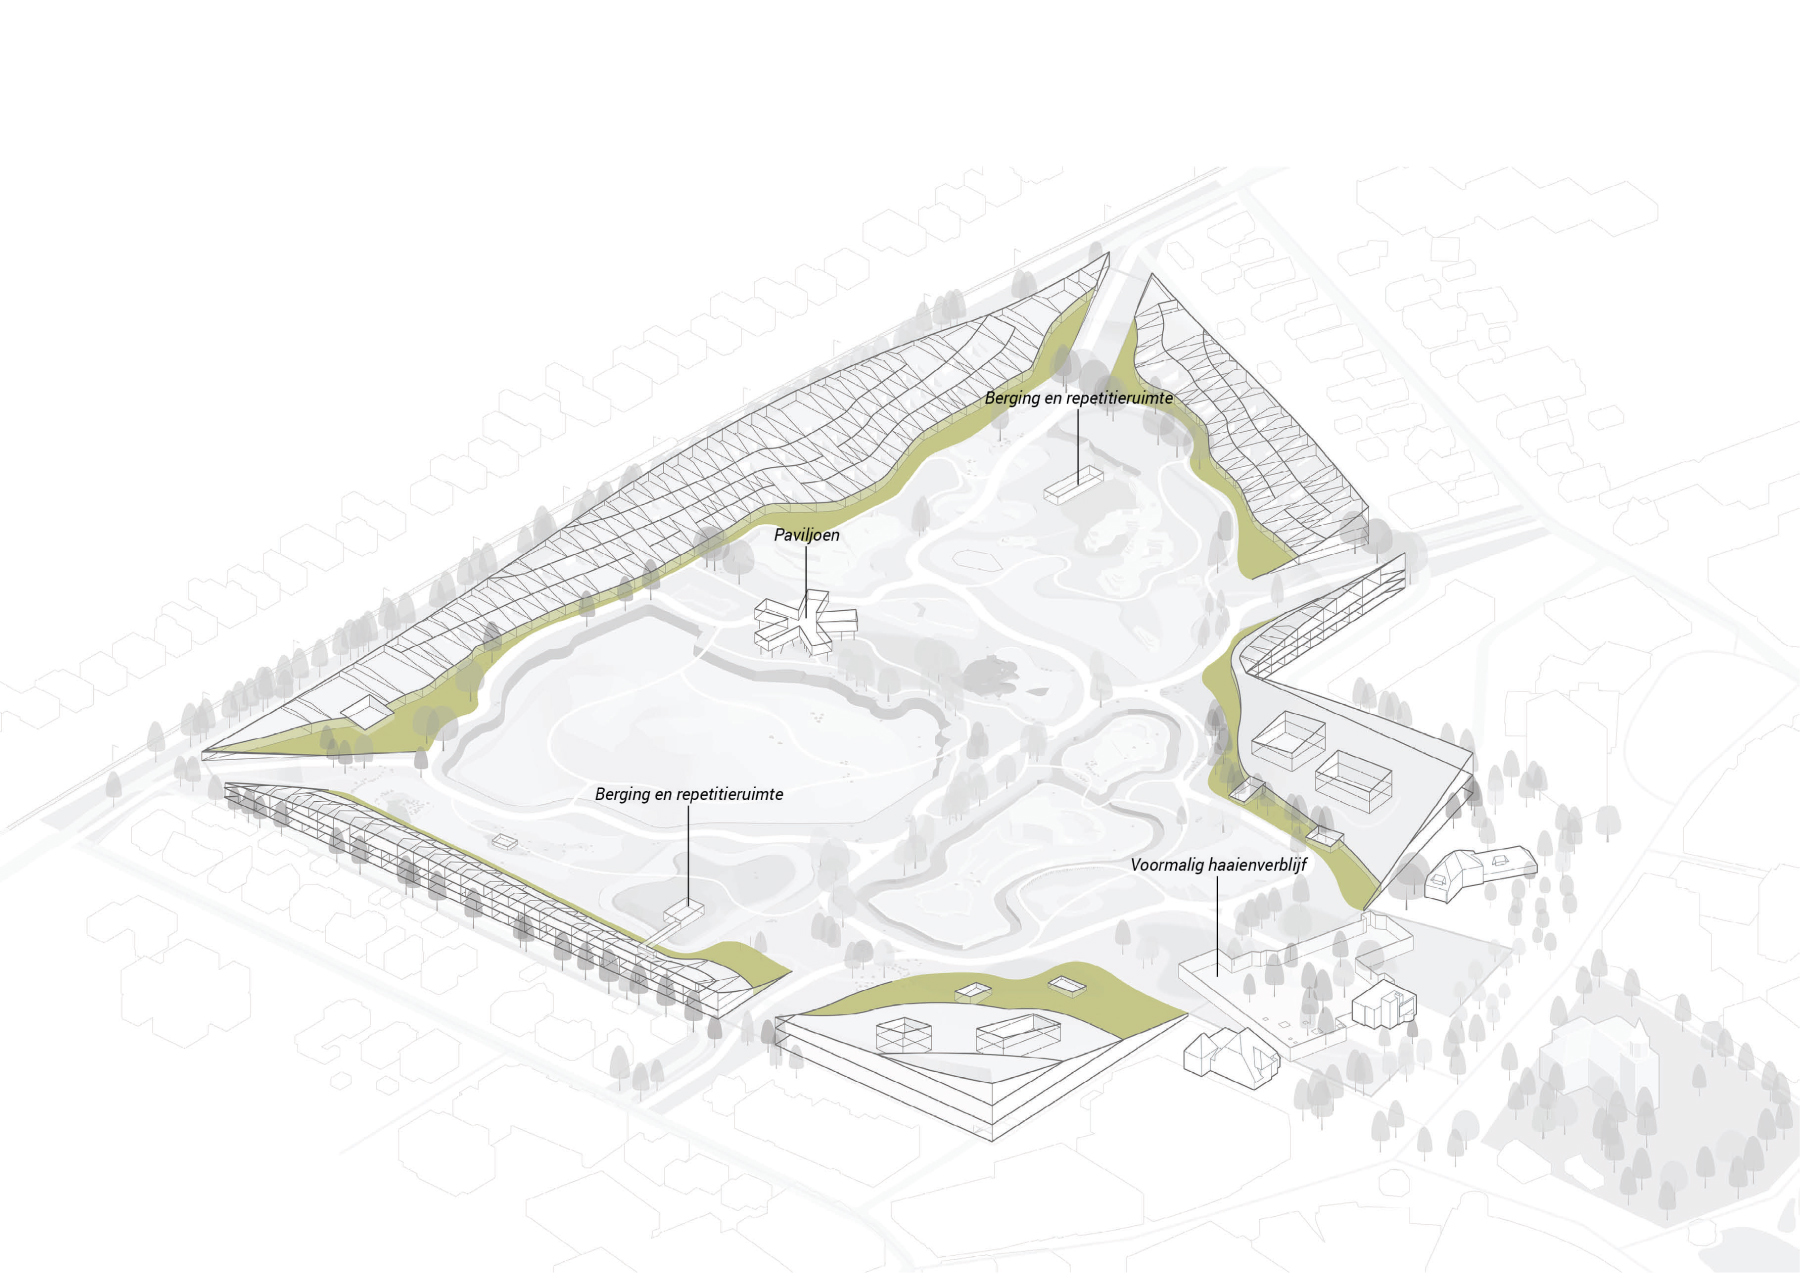 The development of Park Emmen: adding landscape development and enlarging the park